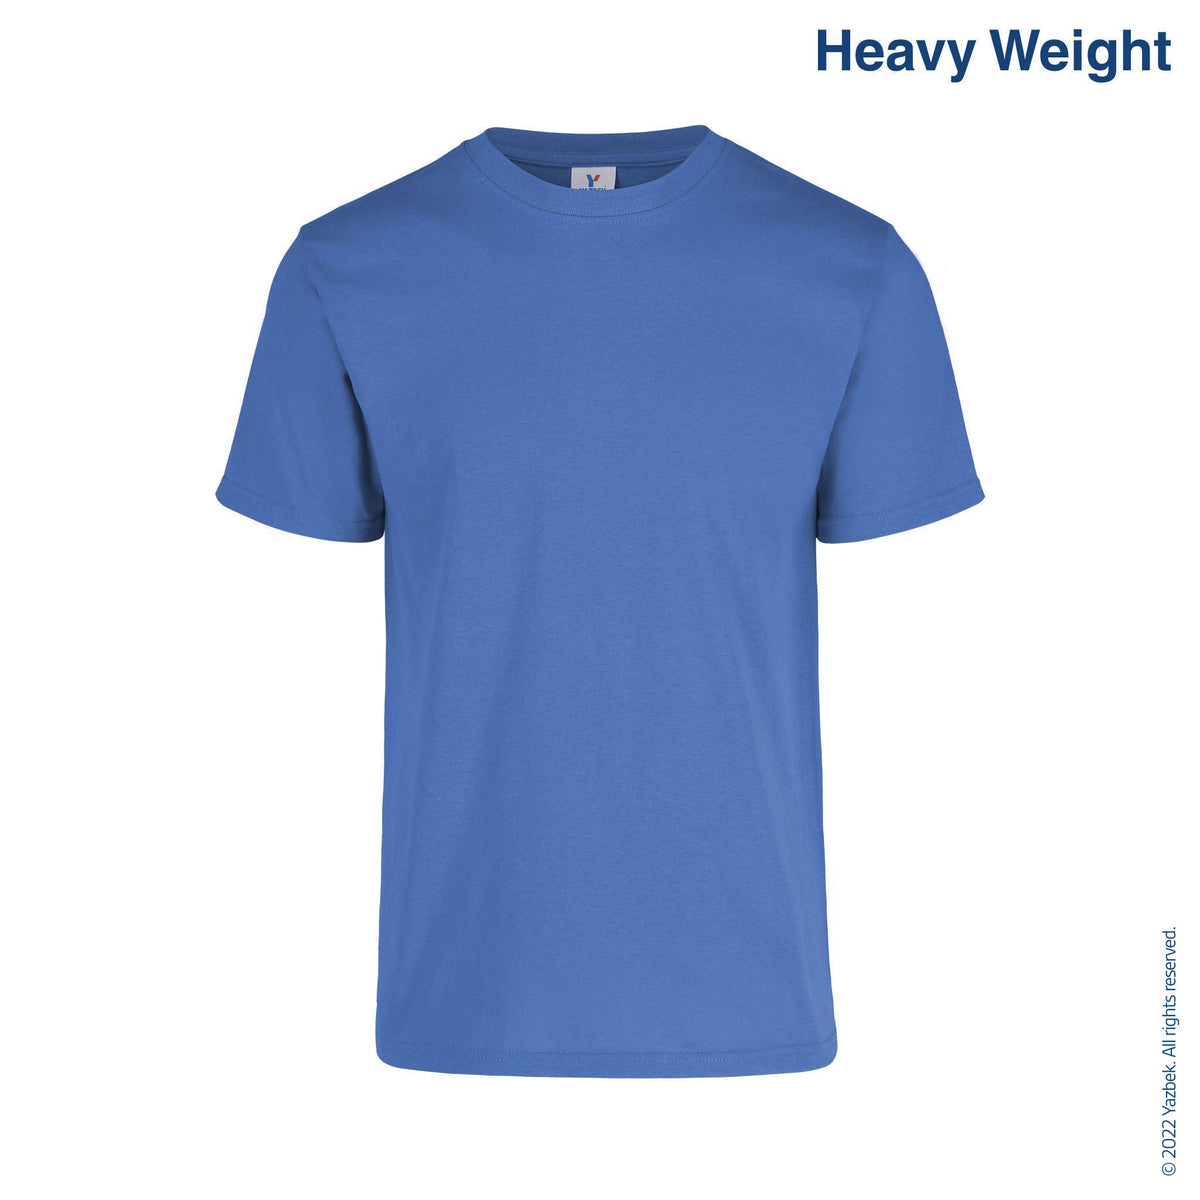 Ombré short sleeve rustic shirt - Sky blue